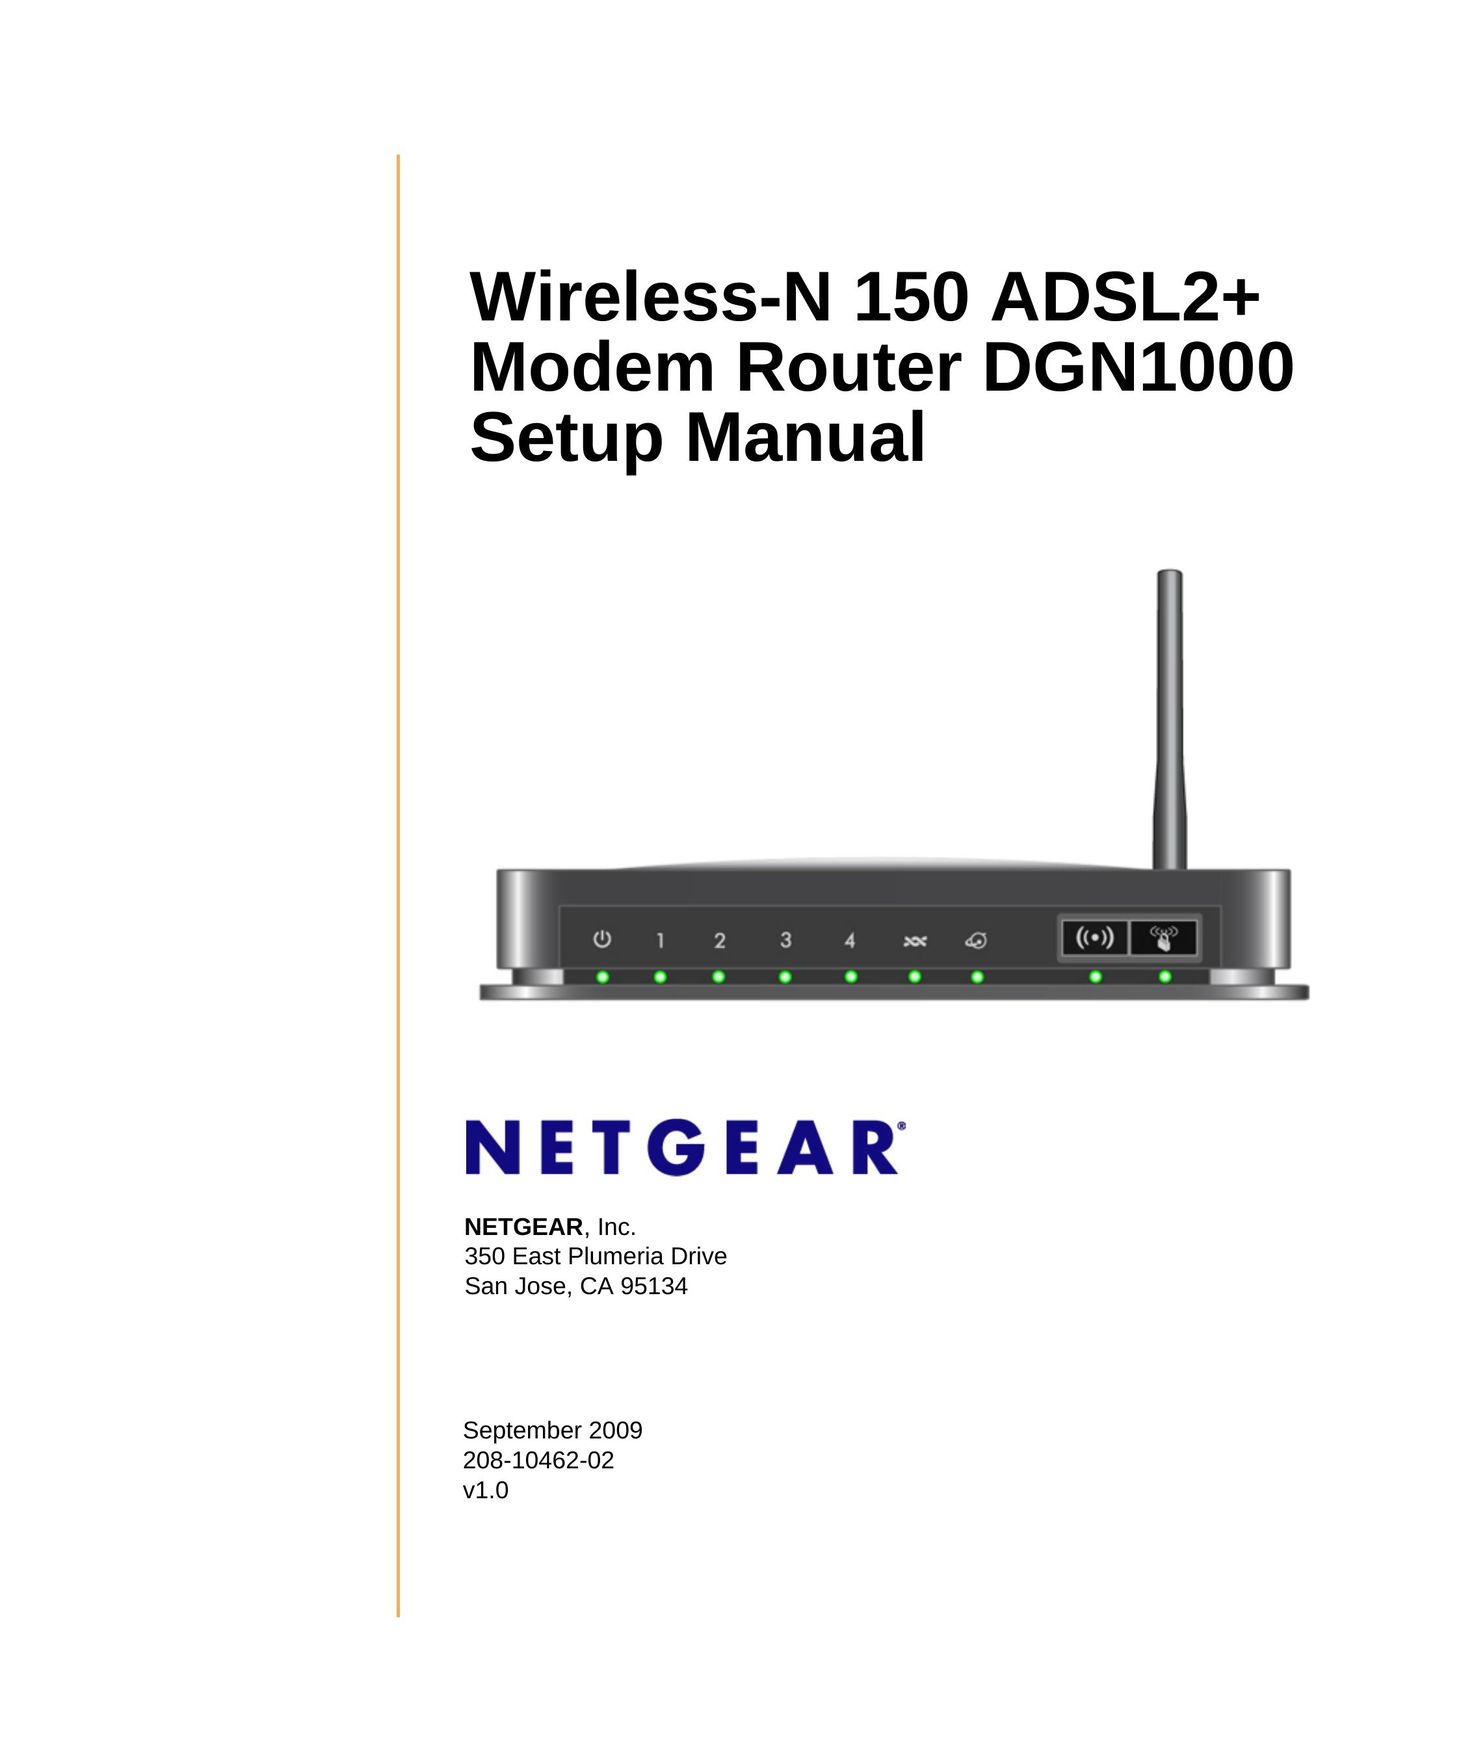 NETGEAR DGN1000-100NAS Network Router User Manual